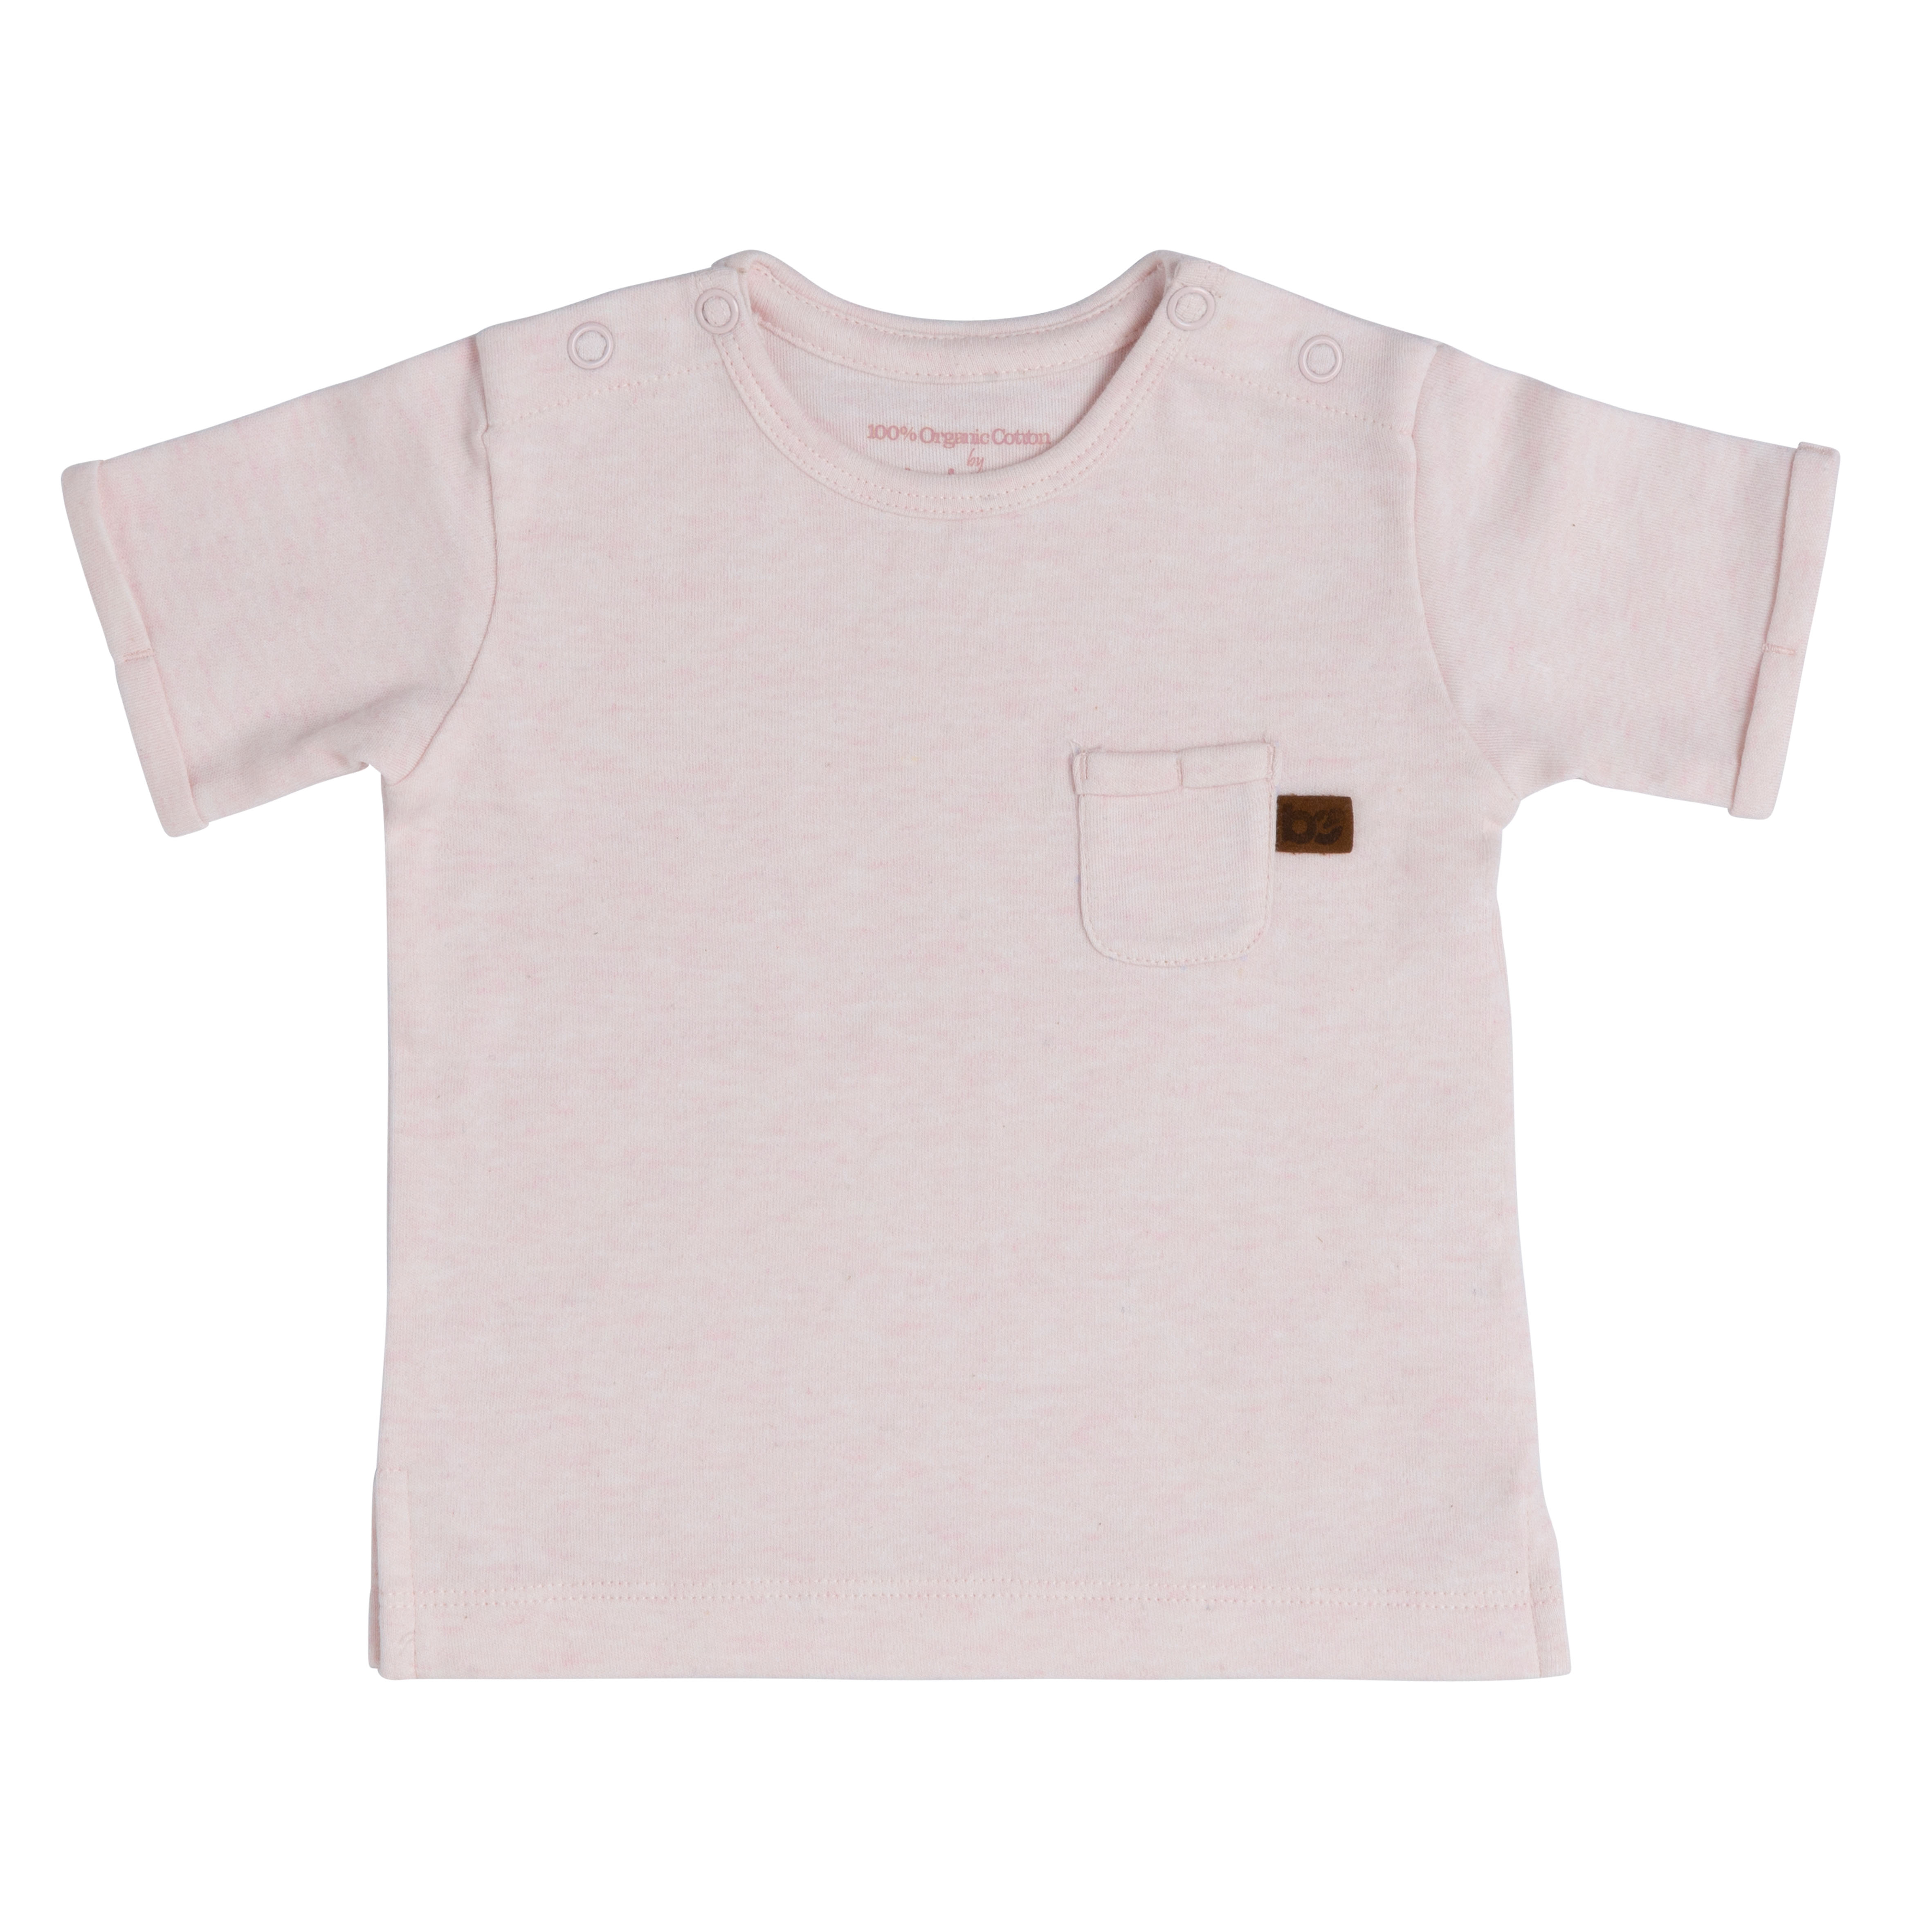 T-shirt Melange classic pink - 56